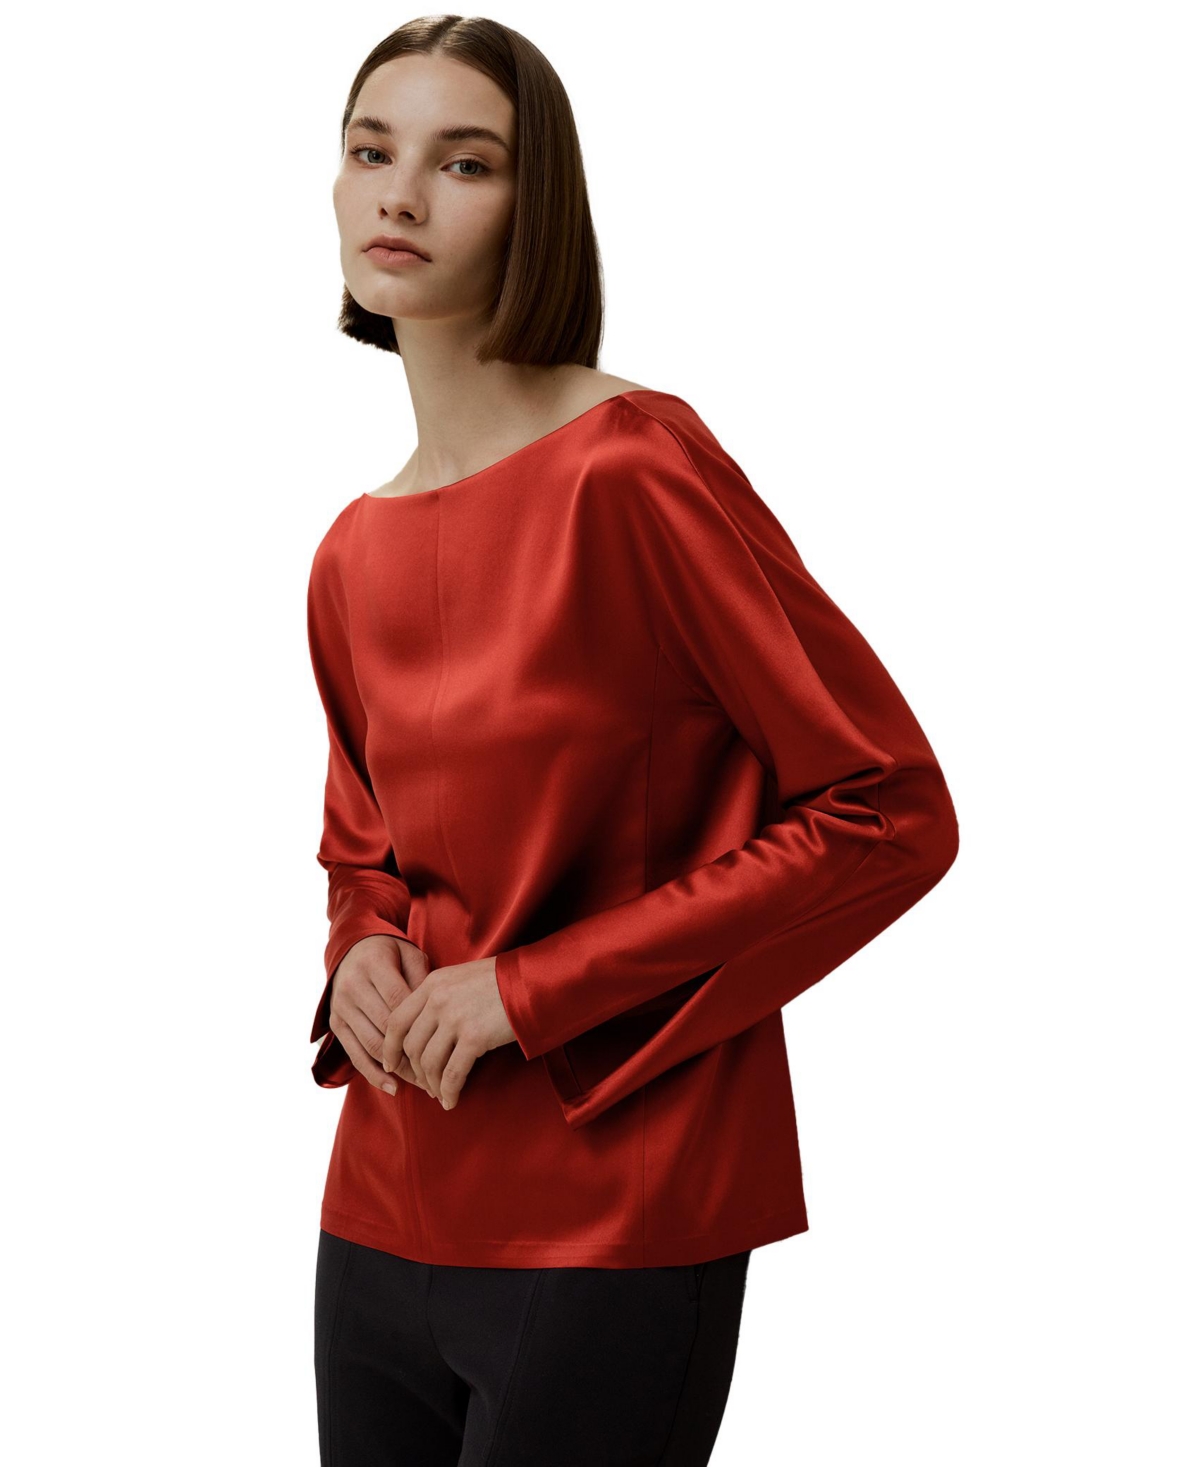 Minimalist Shiny Silk Top for Women - Brick red